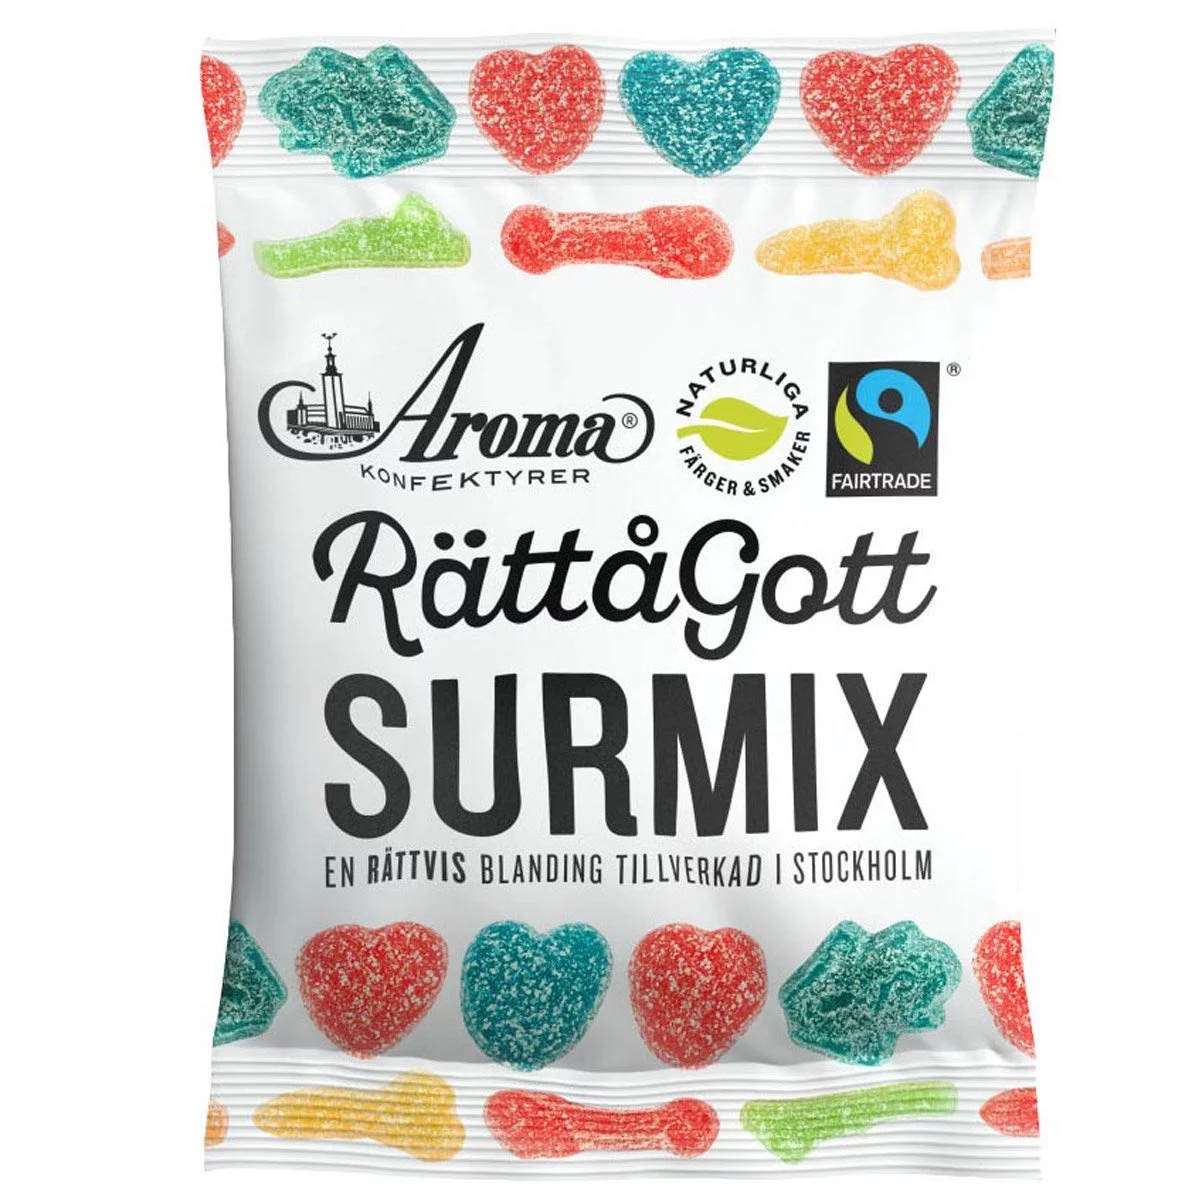 Aroma Rätt & Gott - SURMIX - Rättågott - saurer Mix (140g) 1